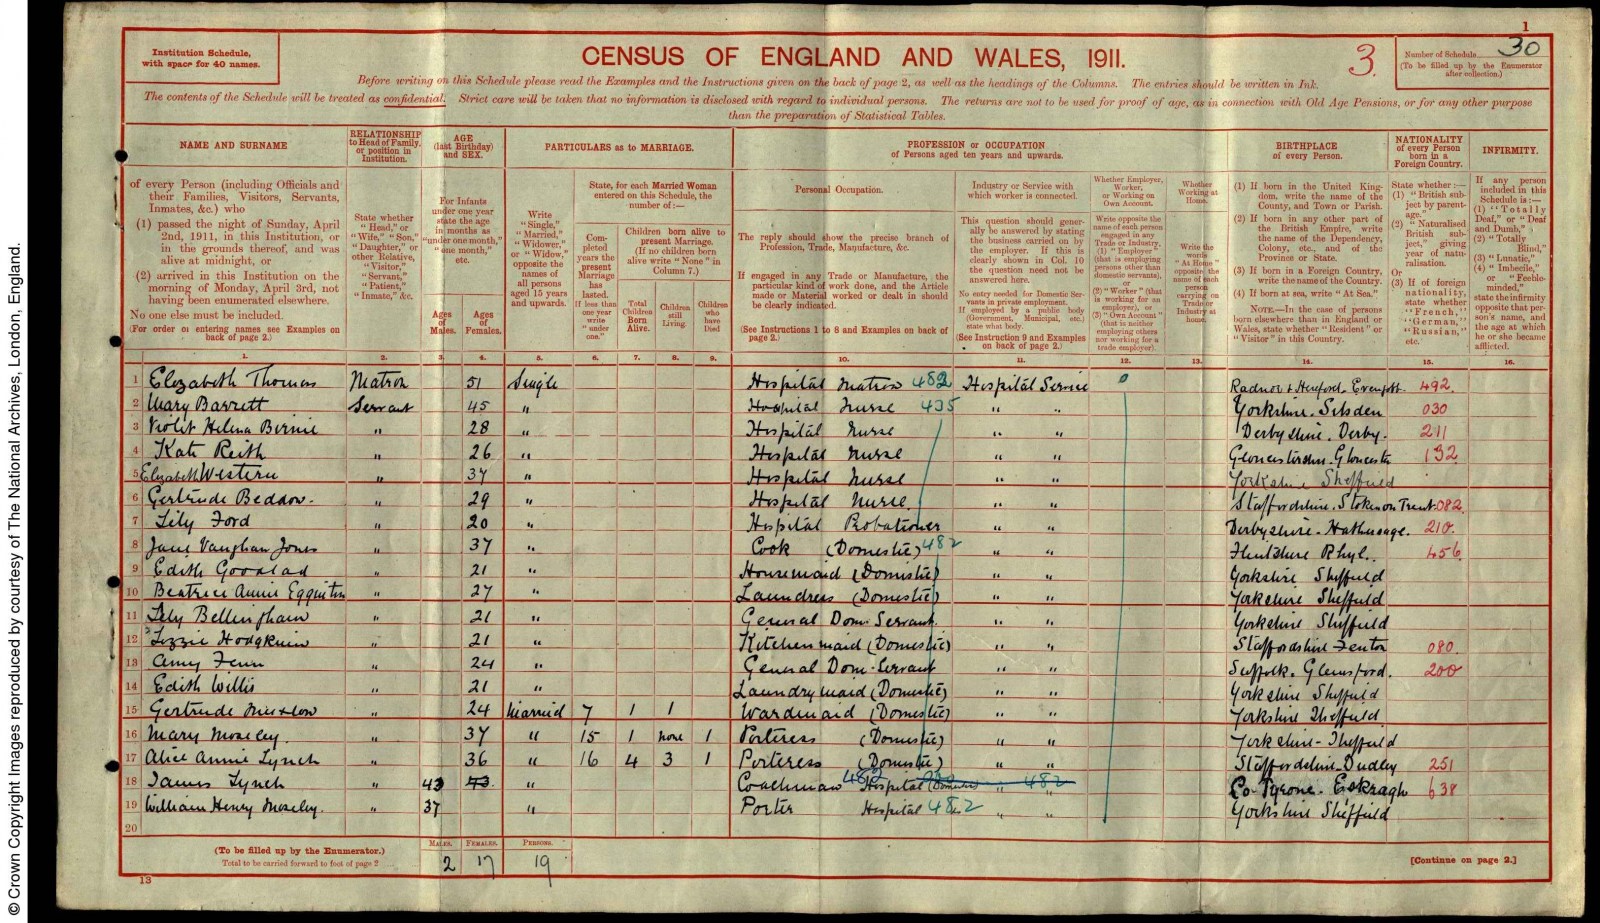 1911 census great grandad Lynch.jpg